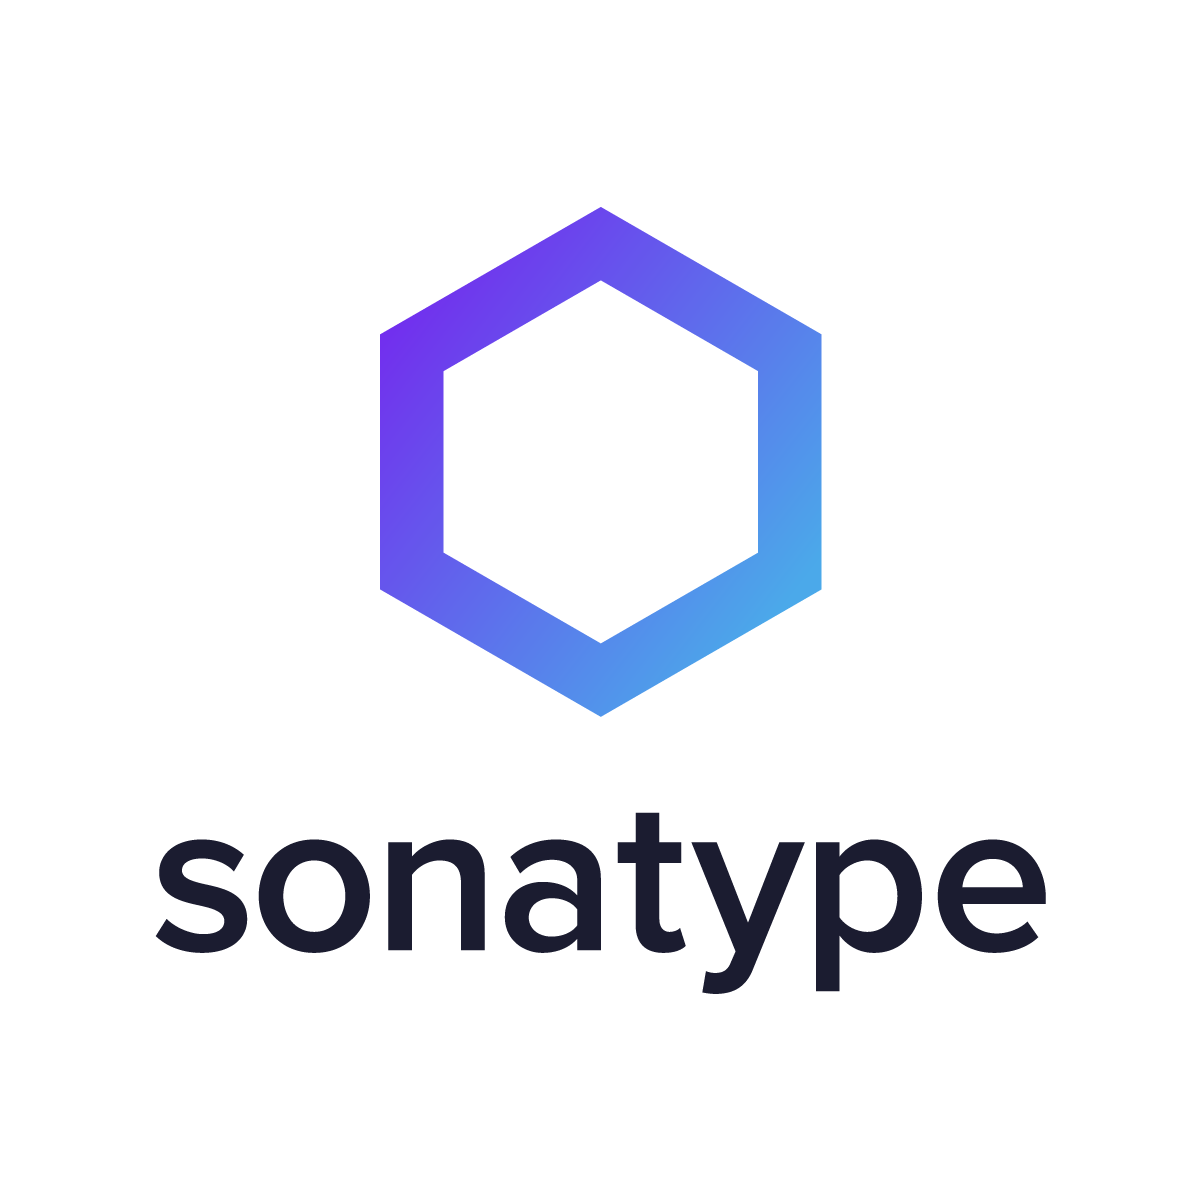 Design jobs at Sonatype